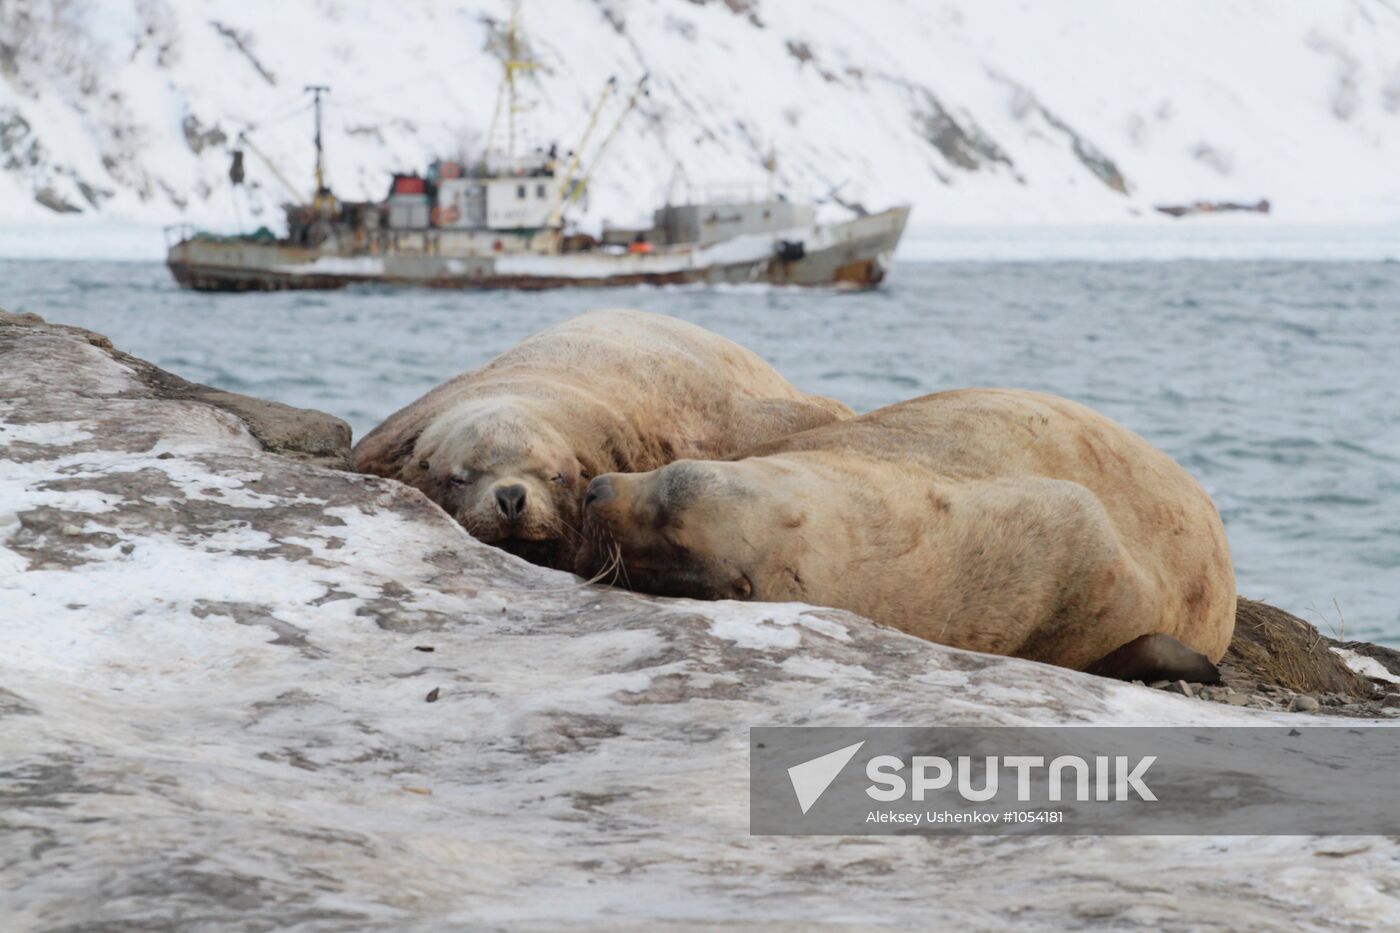 Northern sea lion rookery in Petrovaplovsk-Kamchatsky